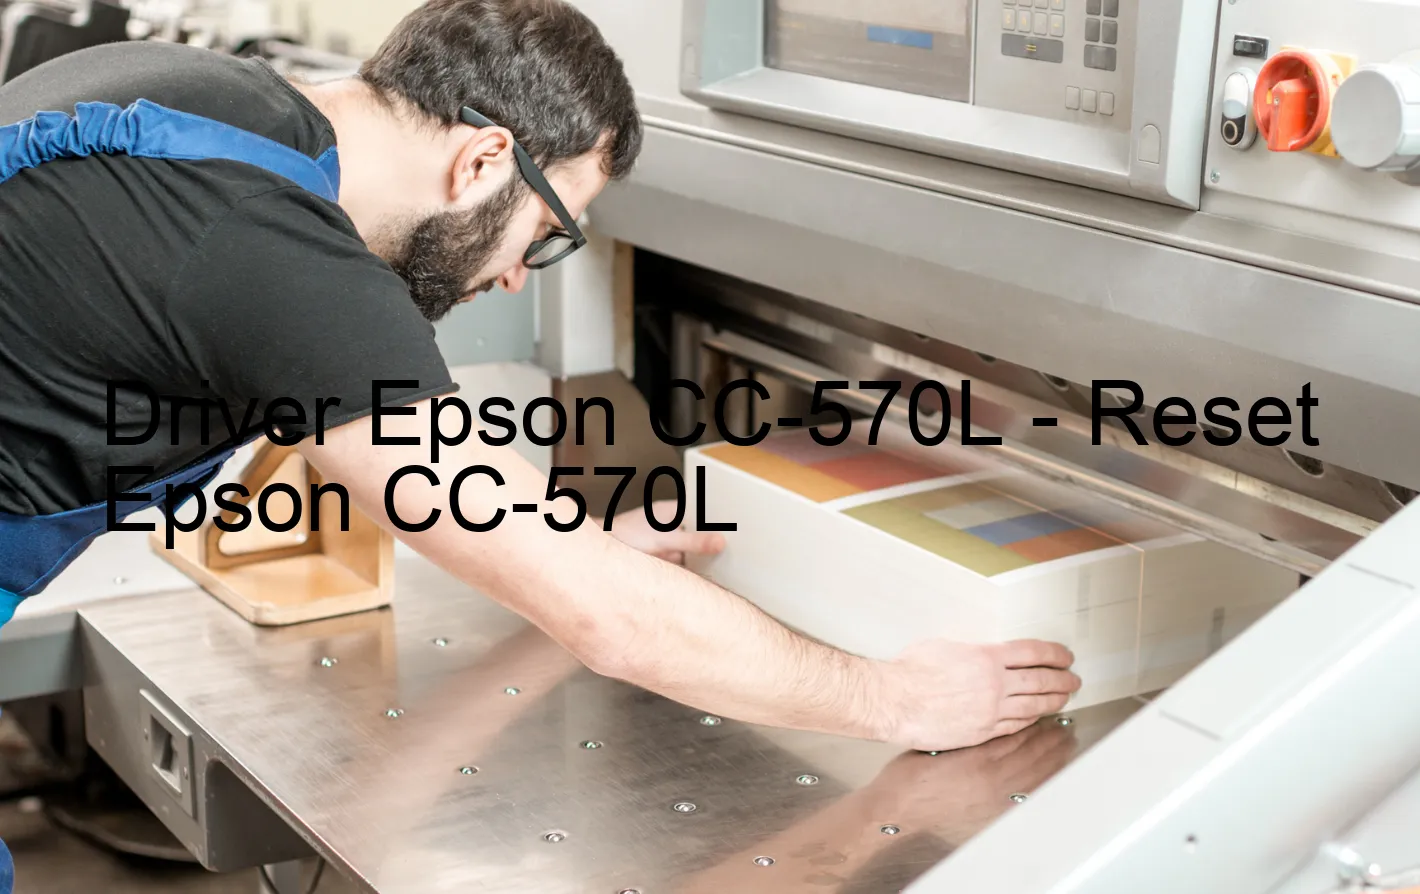 Epson CC-570Lのドライバー、Epson CC-570Lのリセットソフトウェア